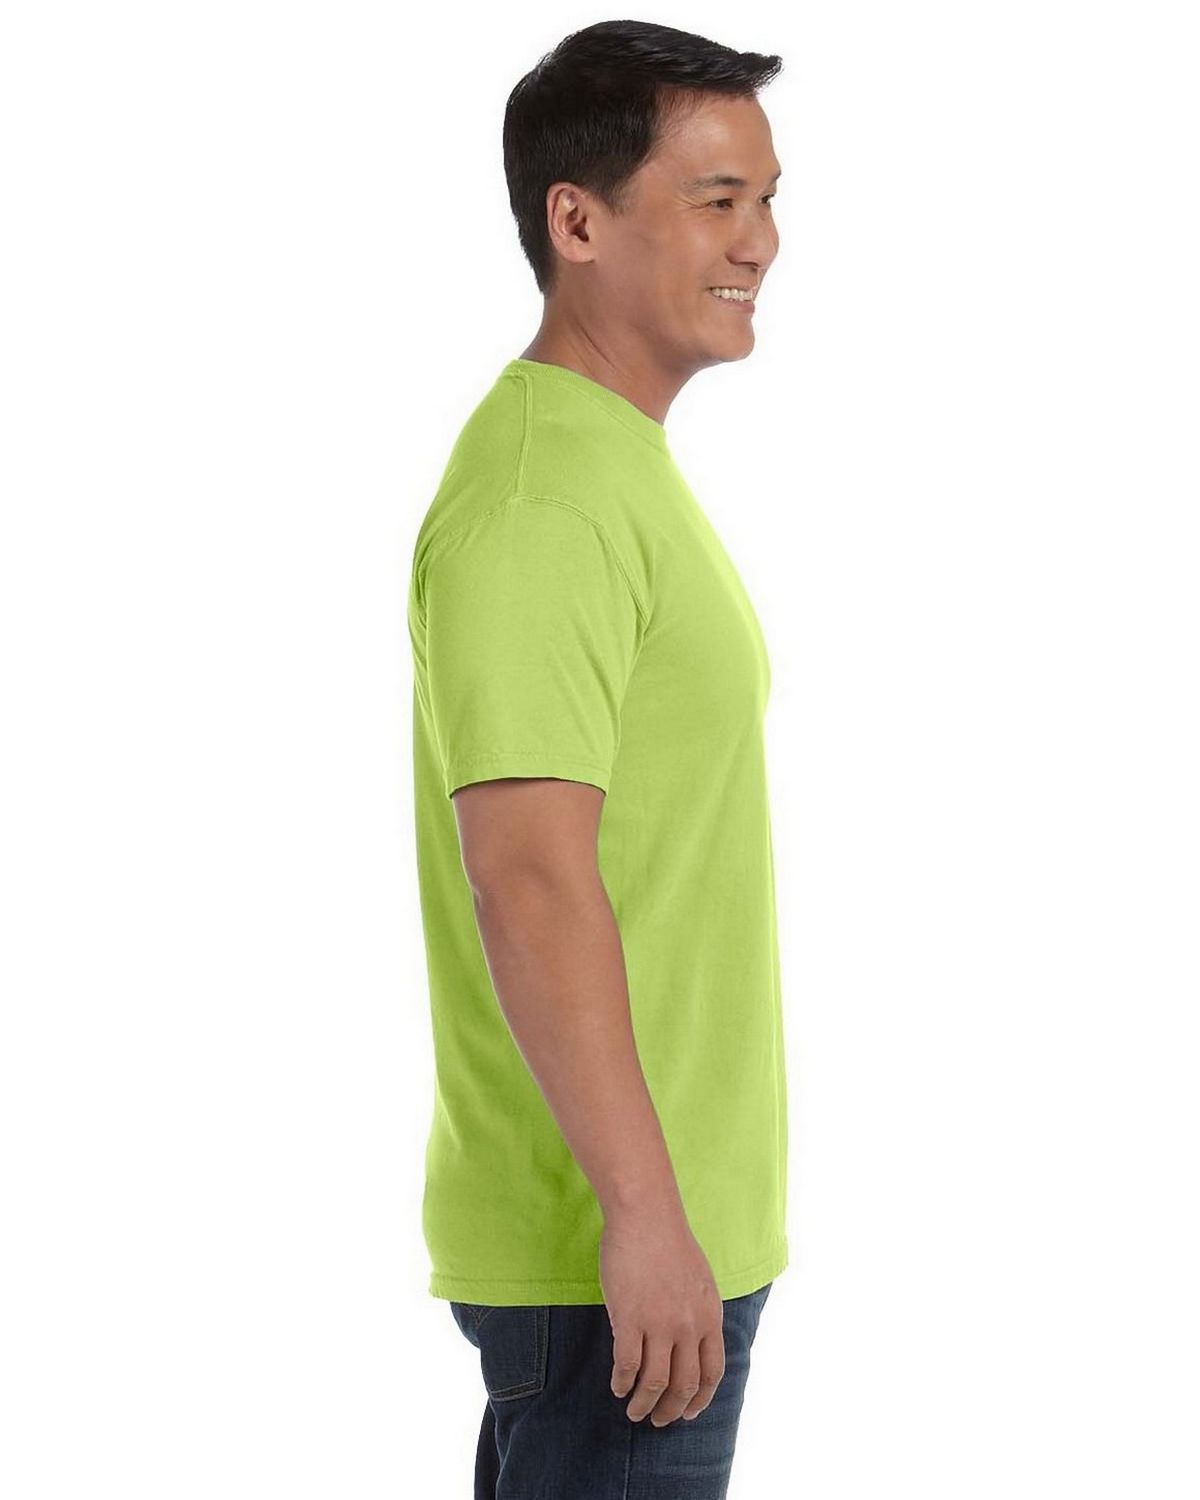 Comfort Colors C1717 Ringspun Garment-Dyed T-Shirt - ApparelnBags.com